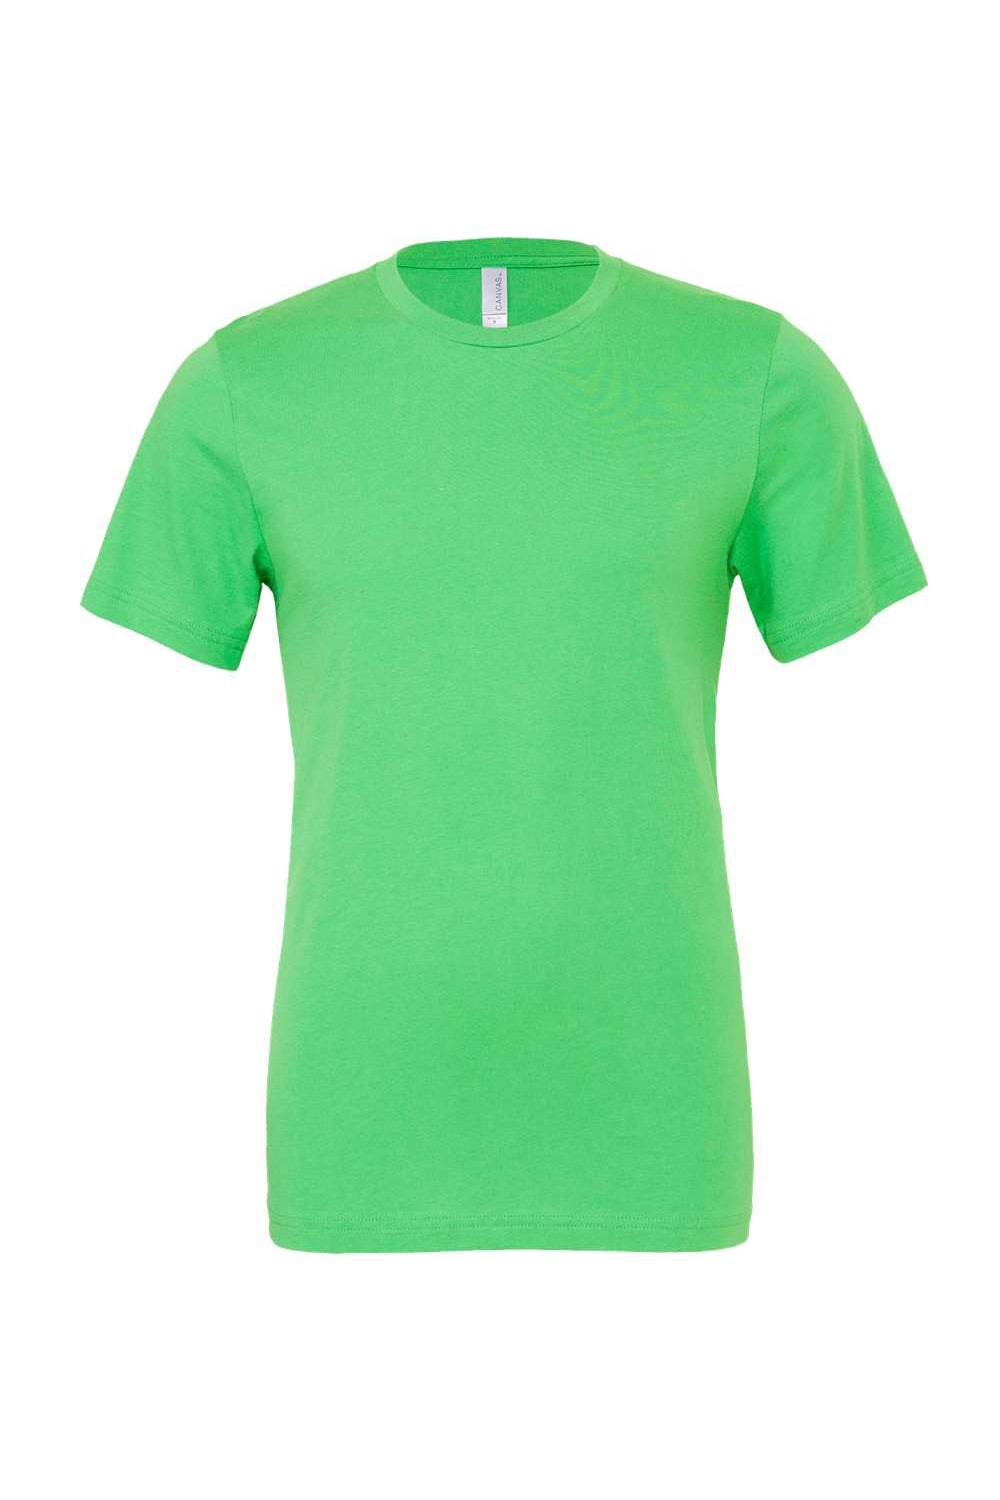 Bella + Canvas BC3001/3001C Mens Jersey Short Sleeve Crewneck T-Shirt Synthetic Green Flat Front